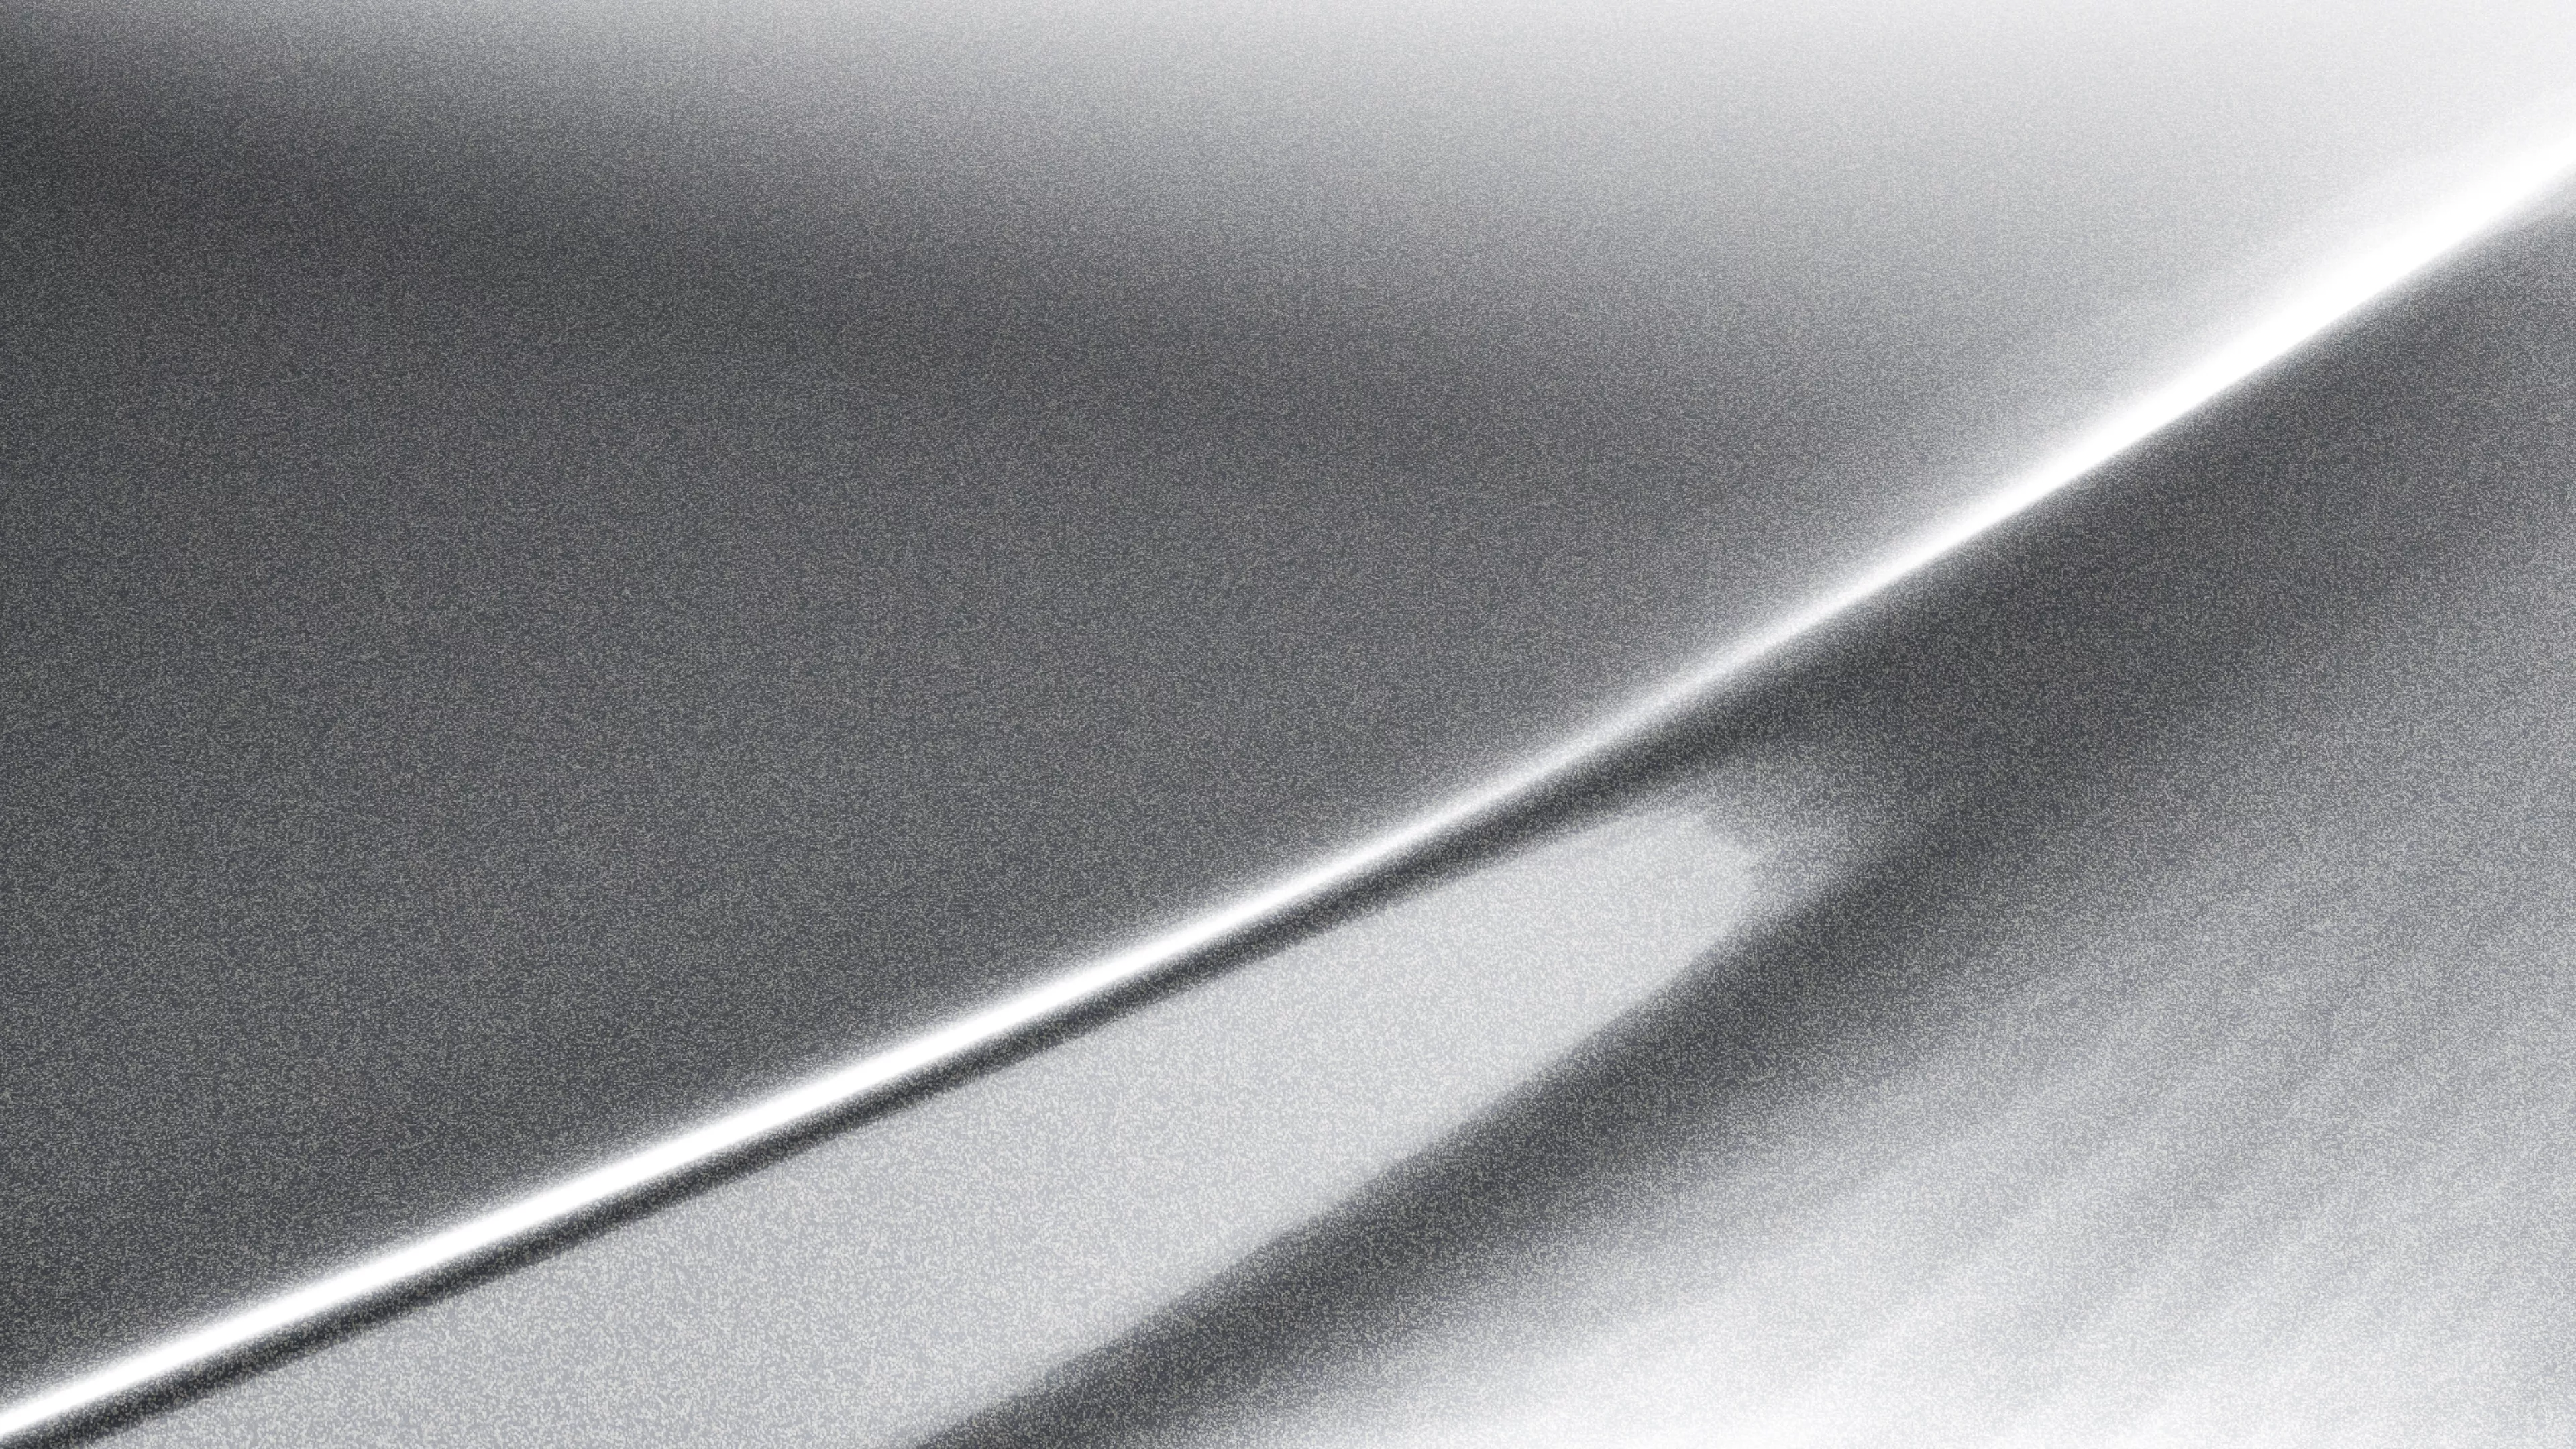 3M™ Wrap Film 2080-HG120 High Gloss White Aluminum, 60 in x 25 yd, (1524
mm x 22.86 m), 1 Roll/Case